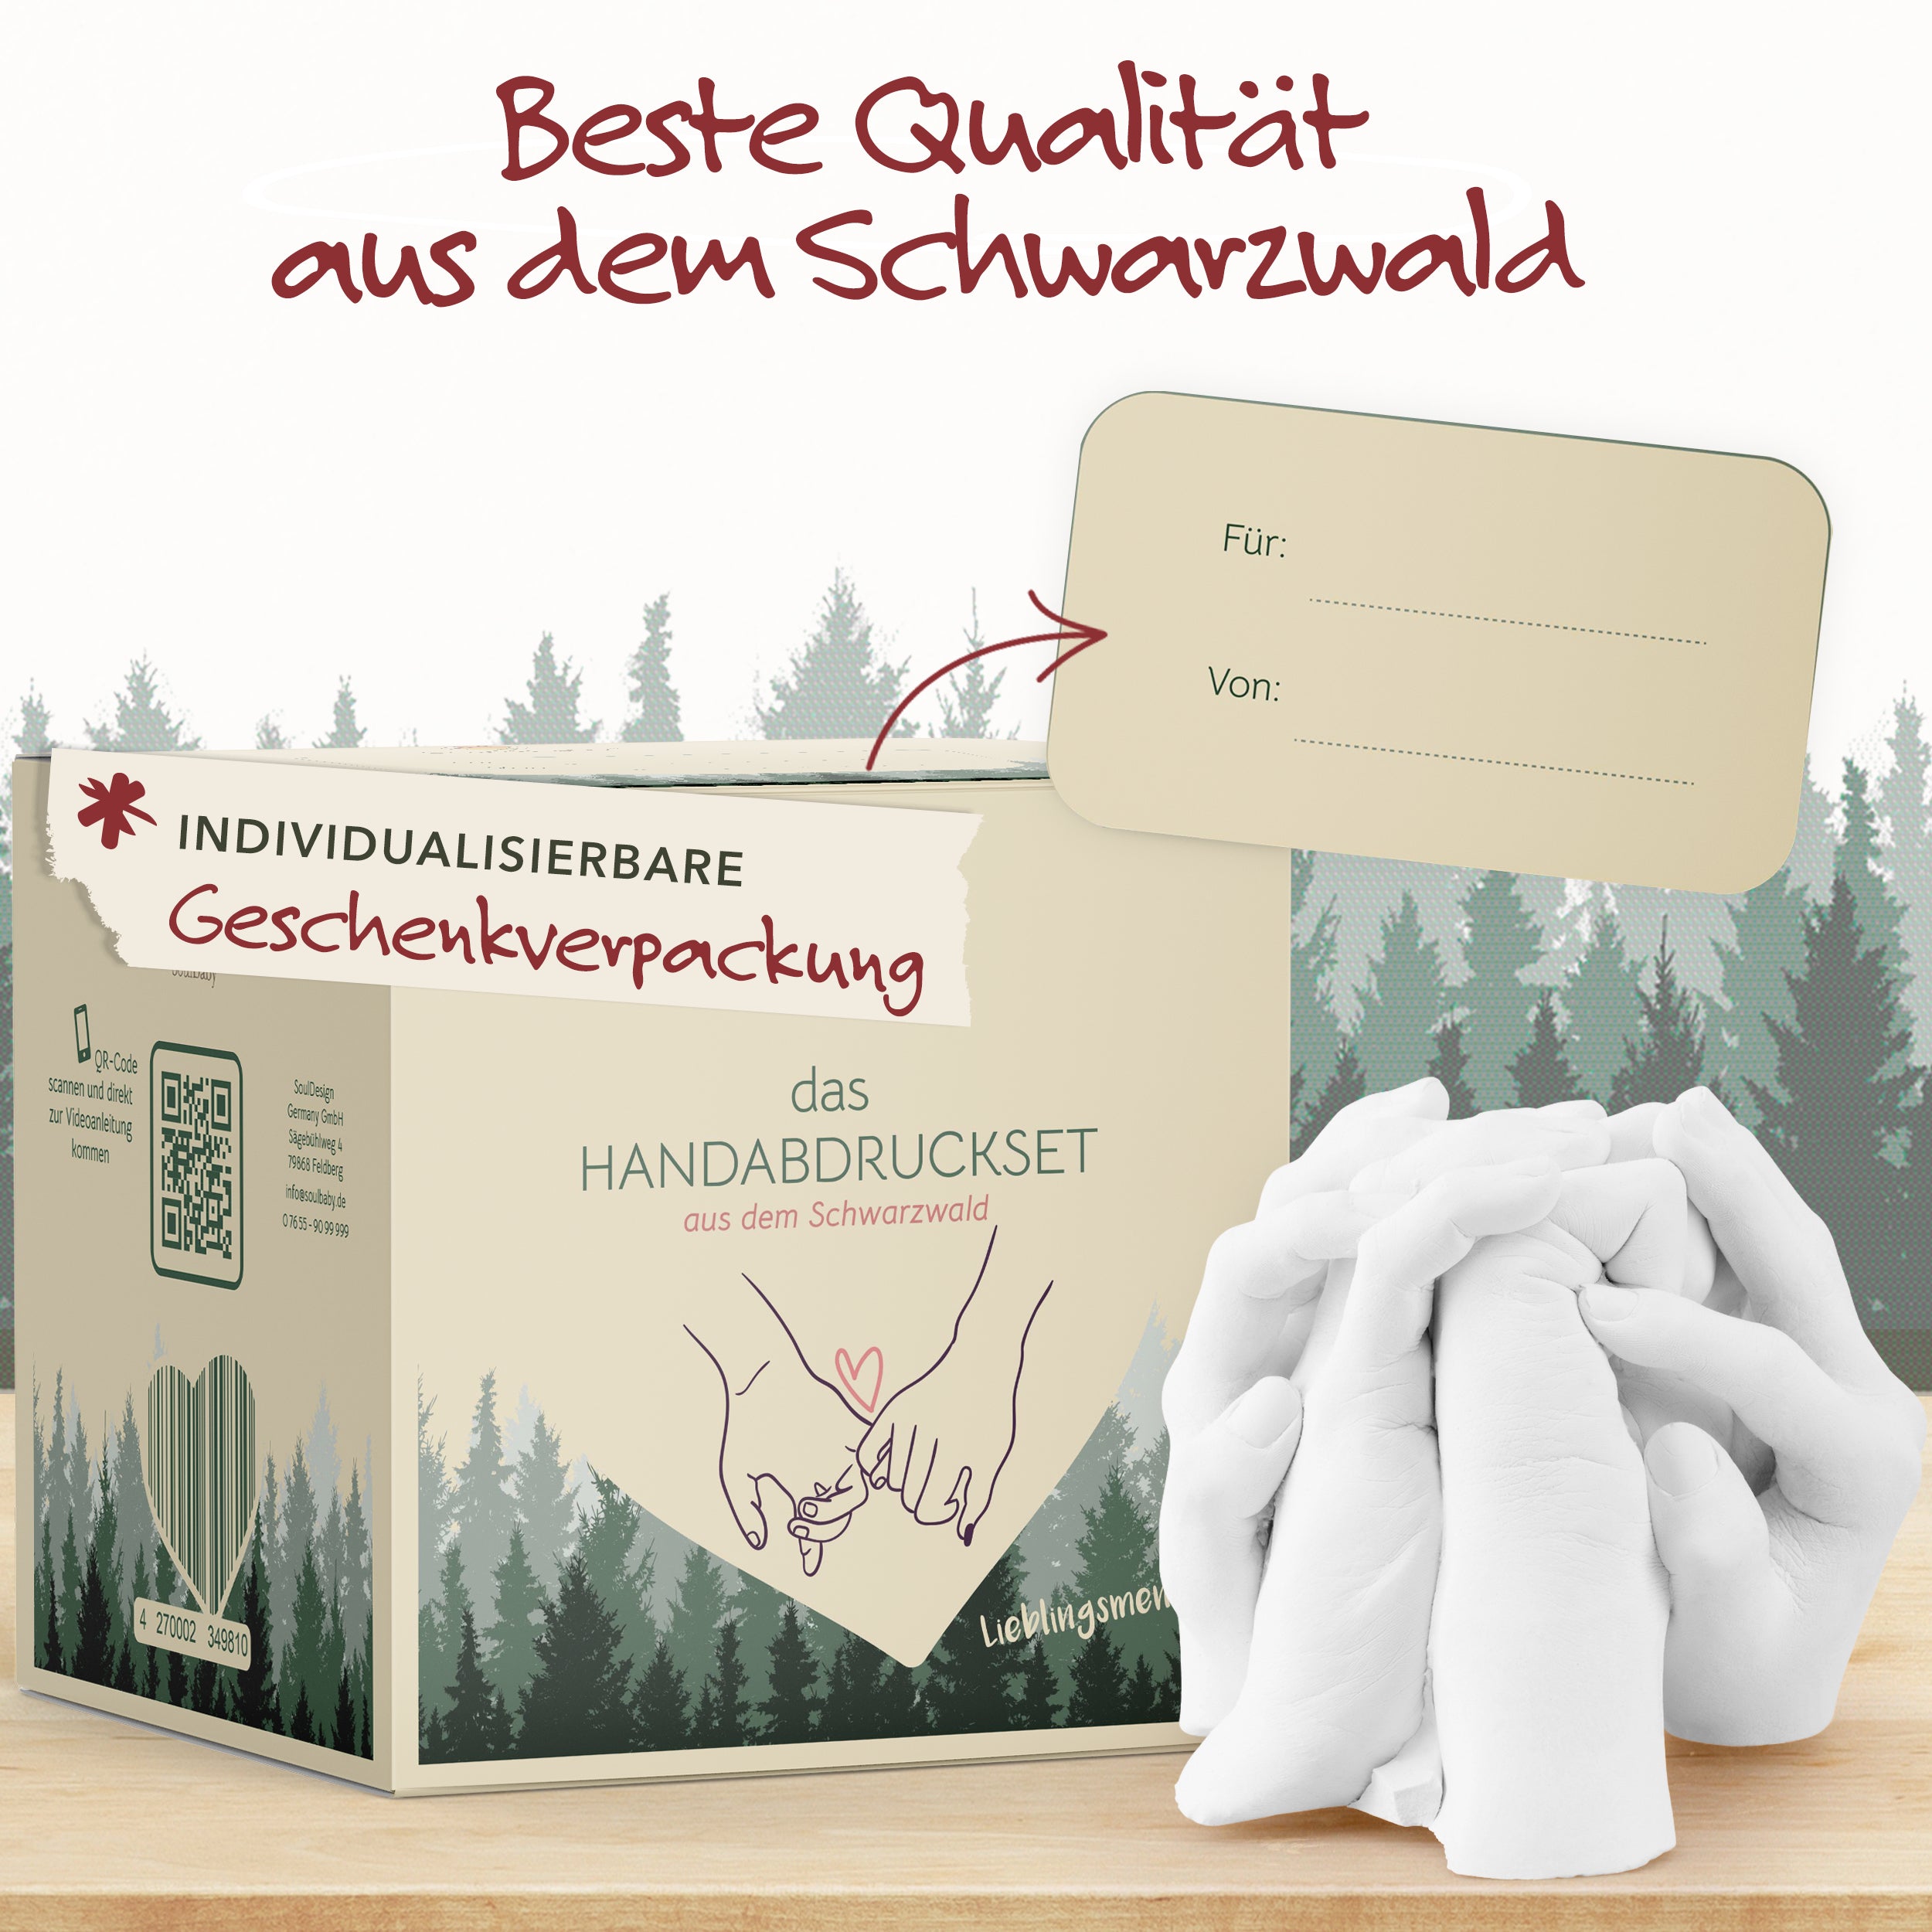 SoulBaby® handprint set for families